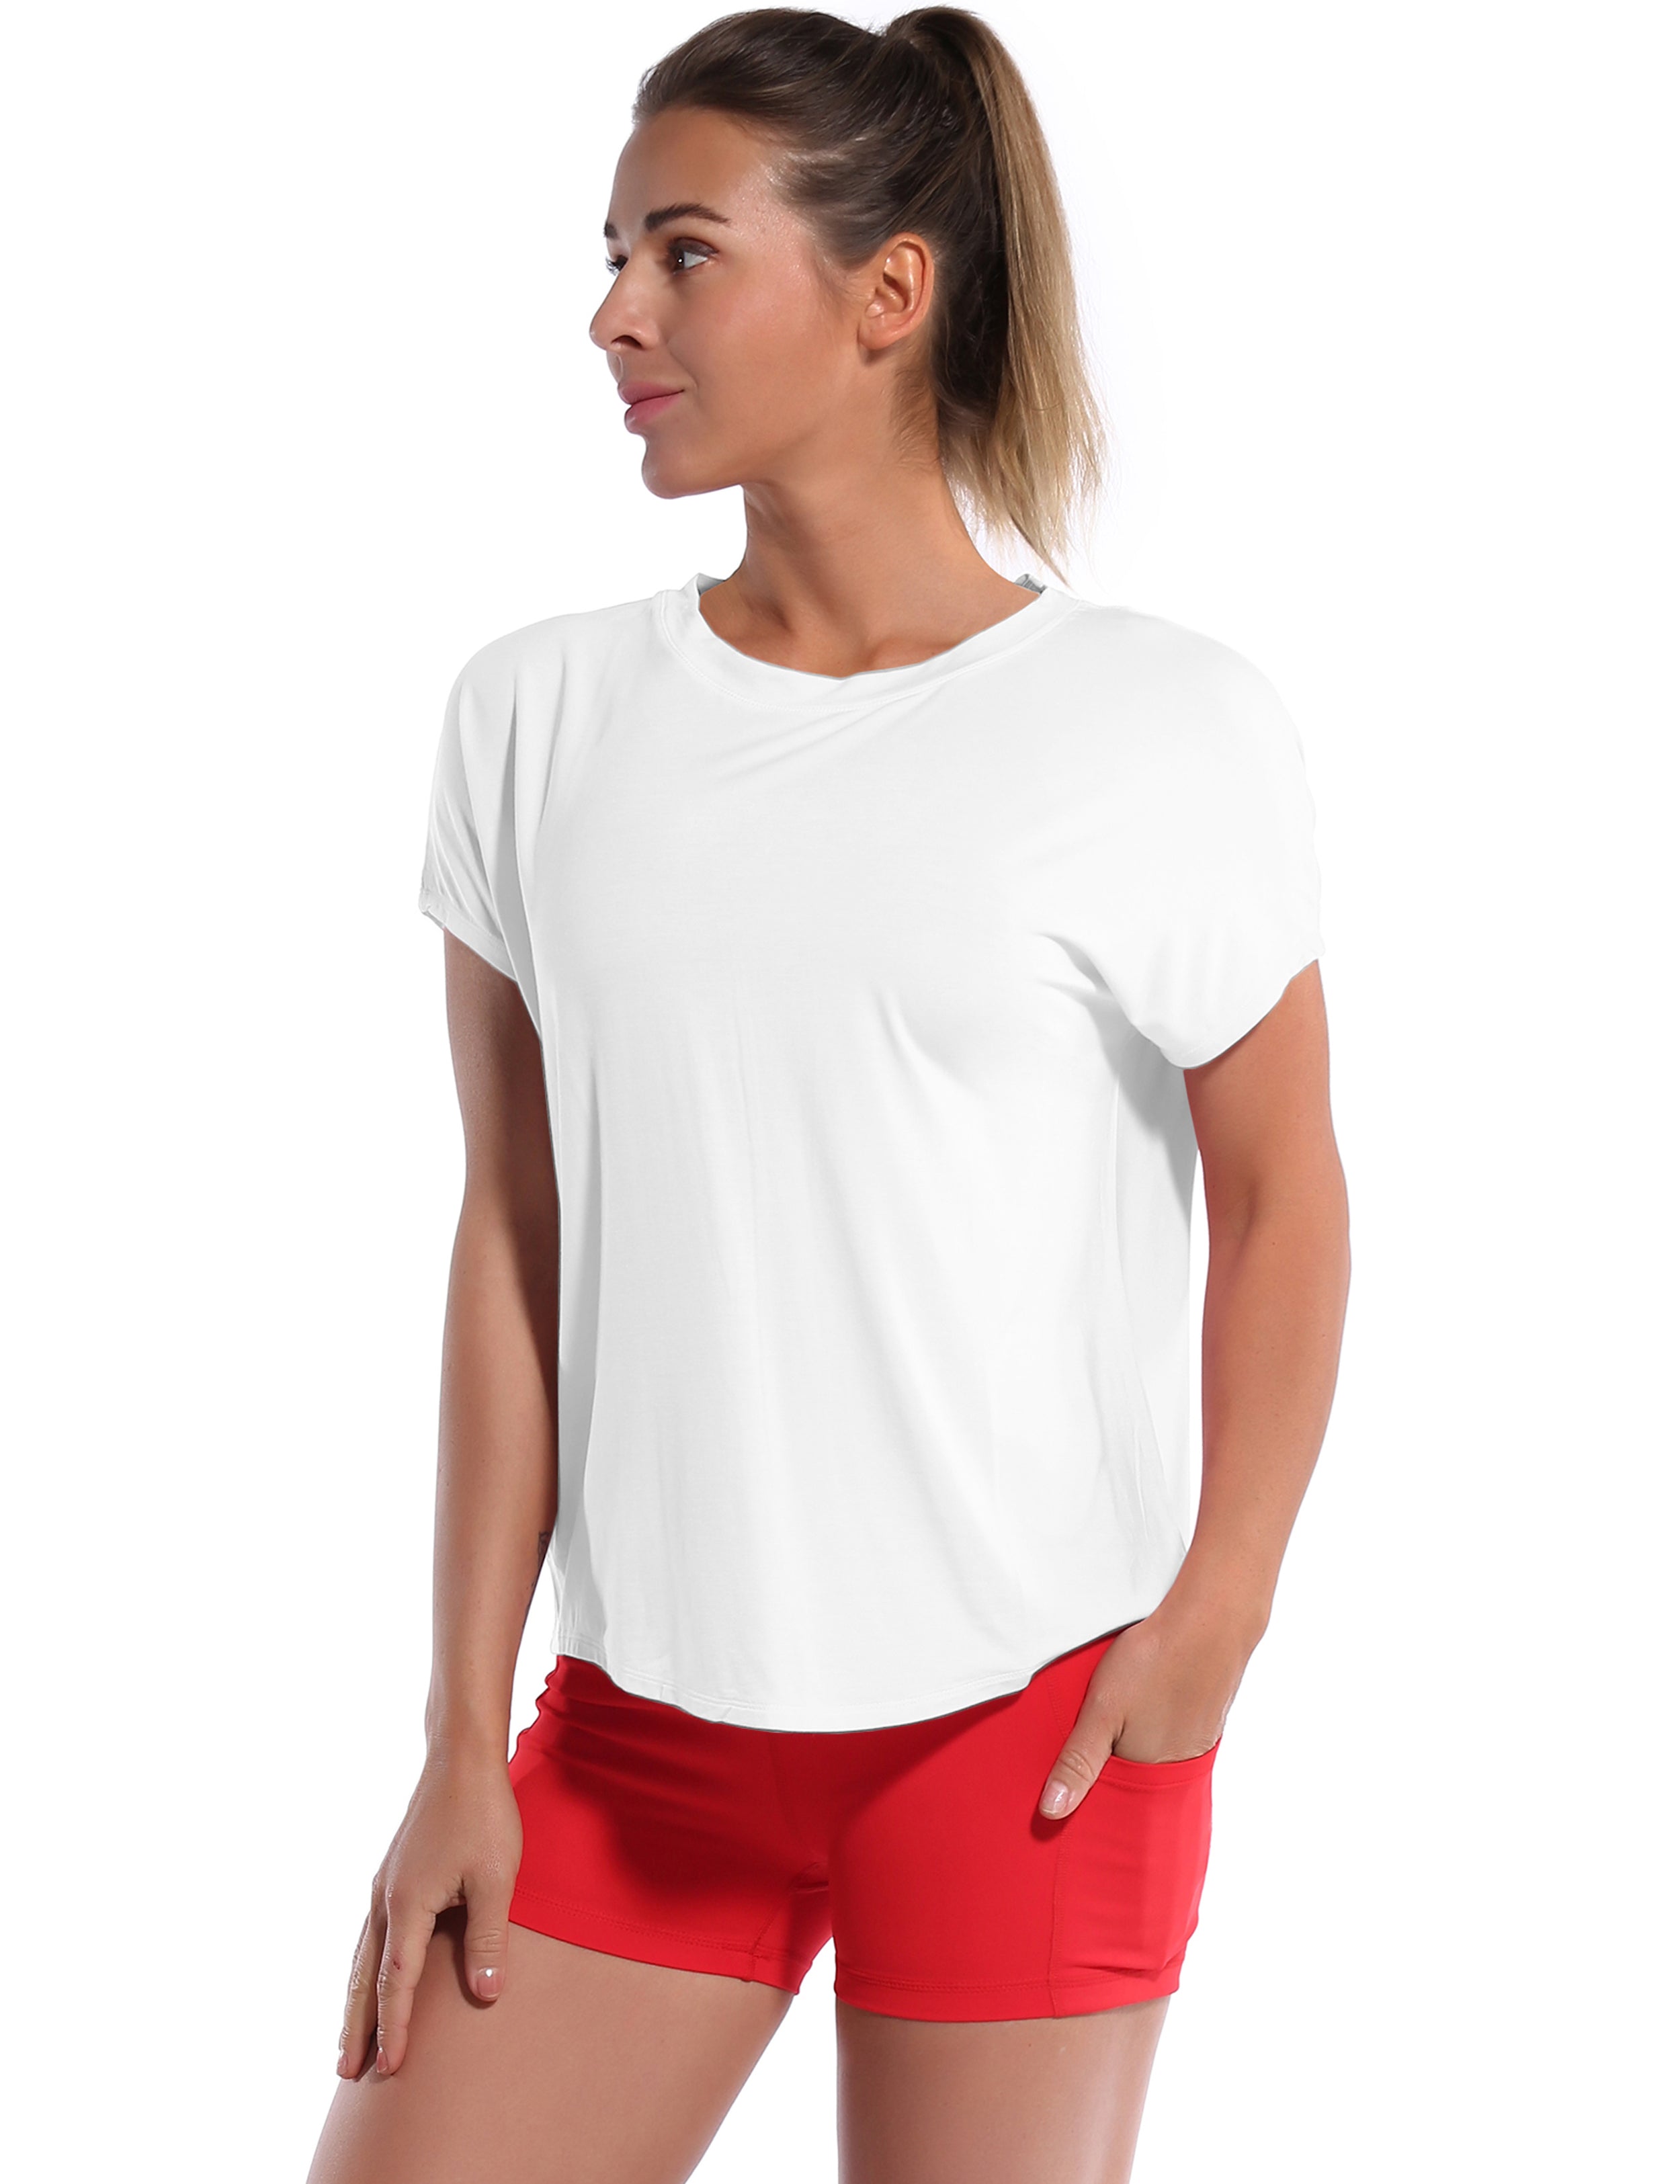 Hip Length Short Sleeve Shirt white_Jogging